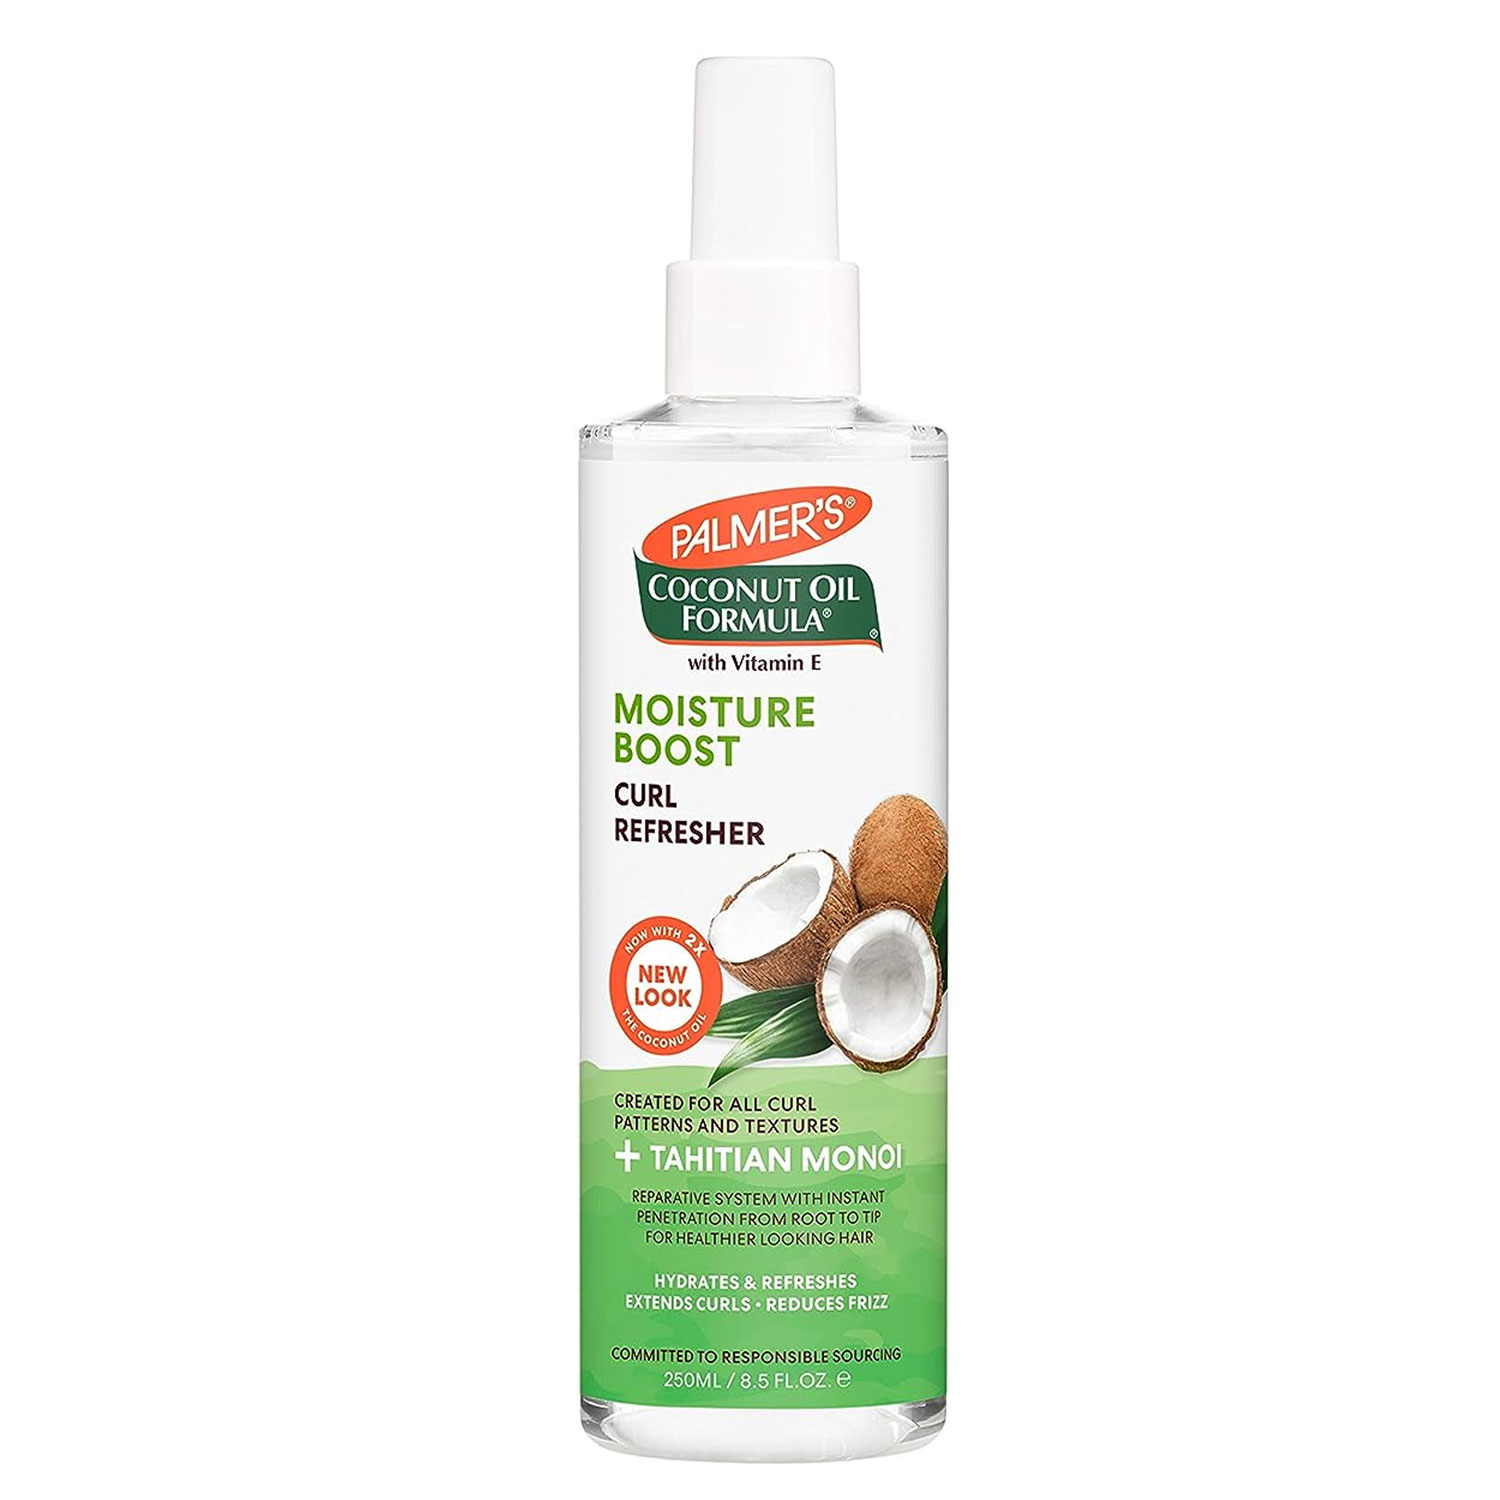 Palmer's Coconut Oil Formula Moisture Boost Curl Refresher Spray, 8.5 Oz. - image 1 of 2